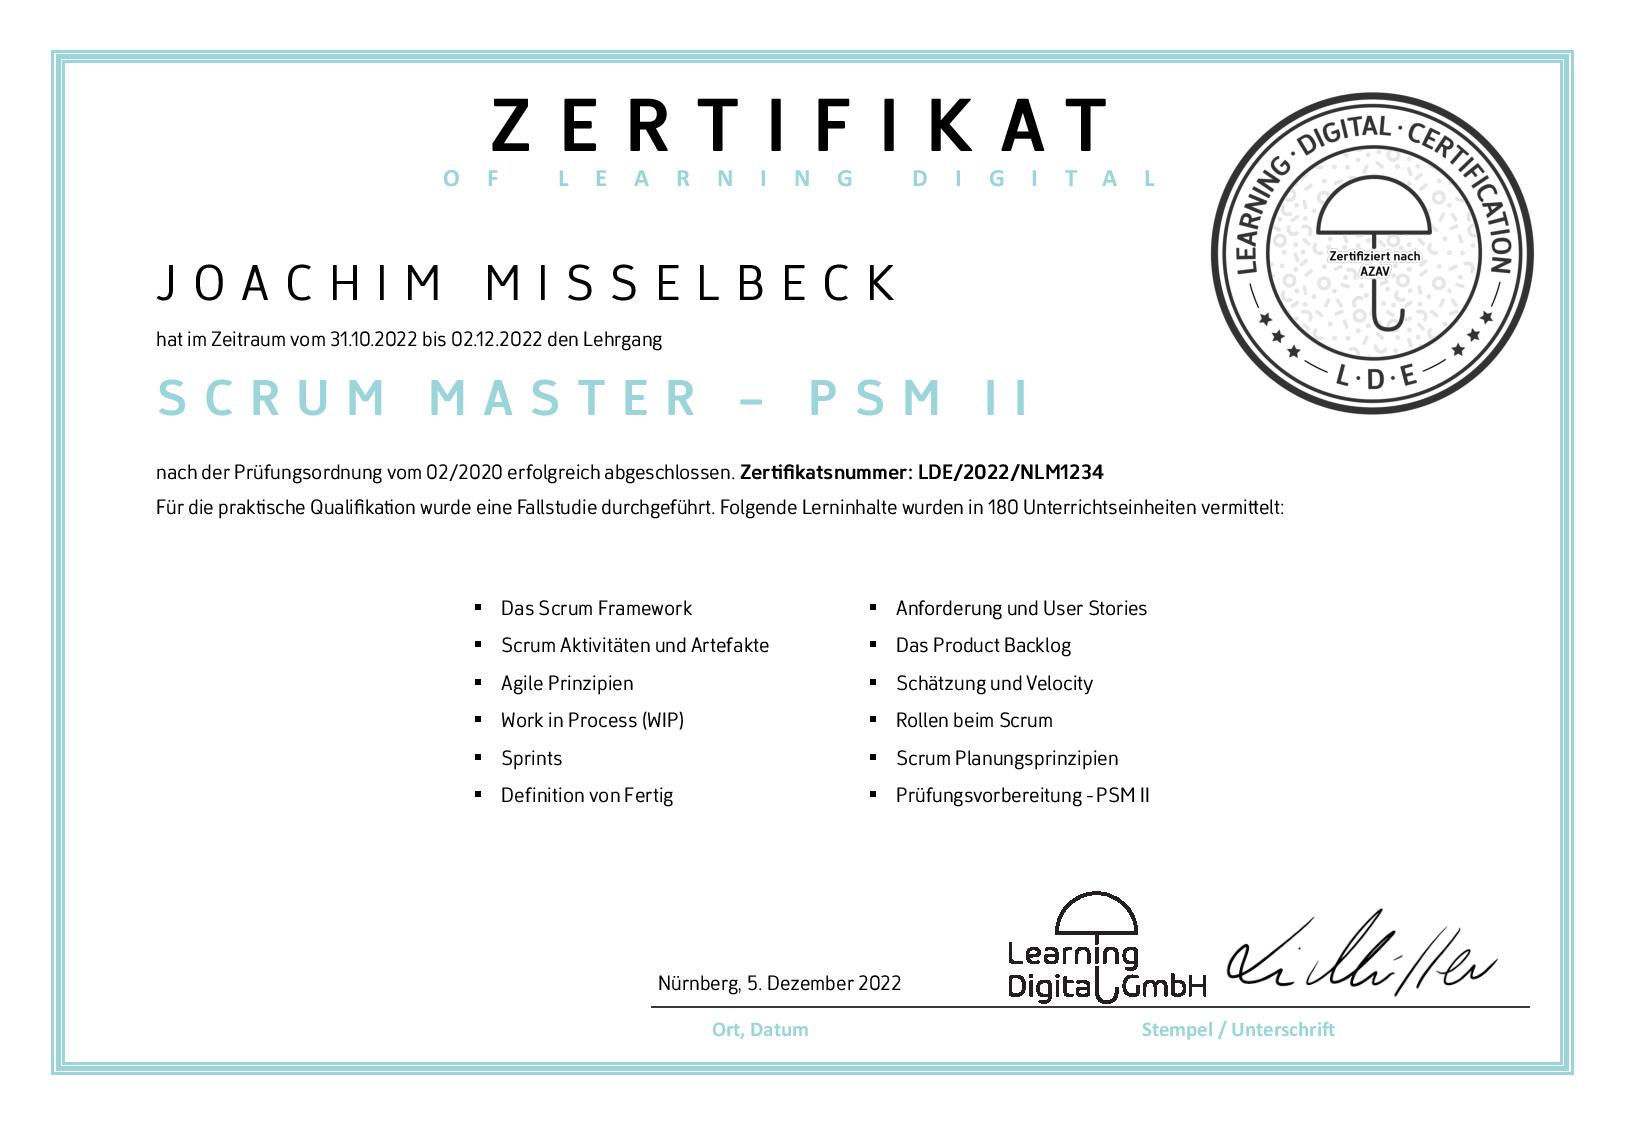 Joachim Misselbeck Zertifikat 2022.12.05 page 001